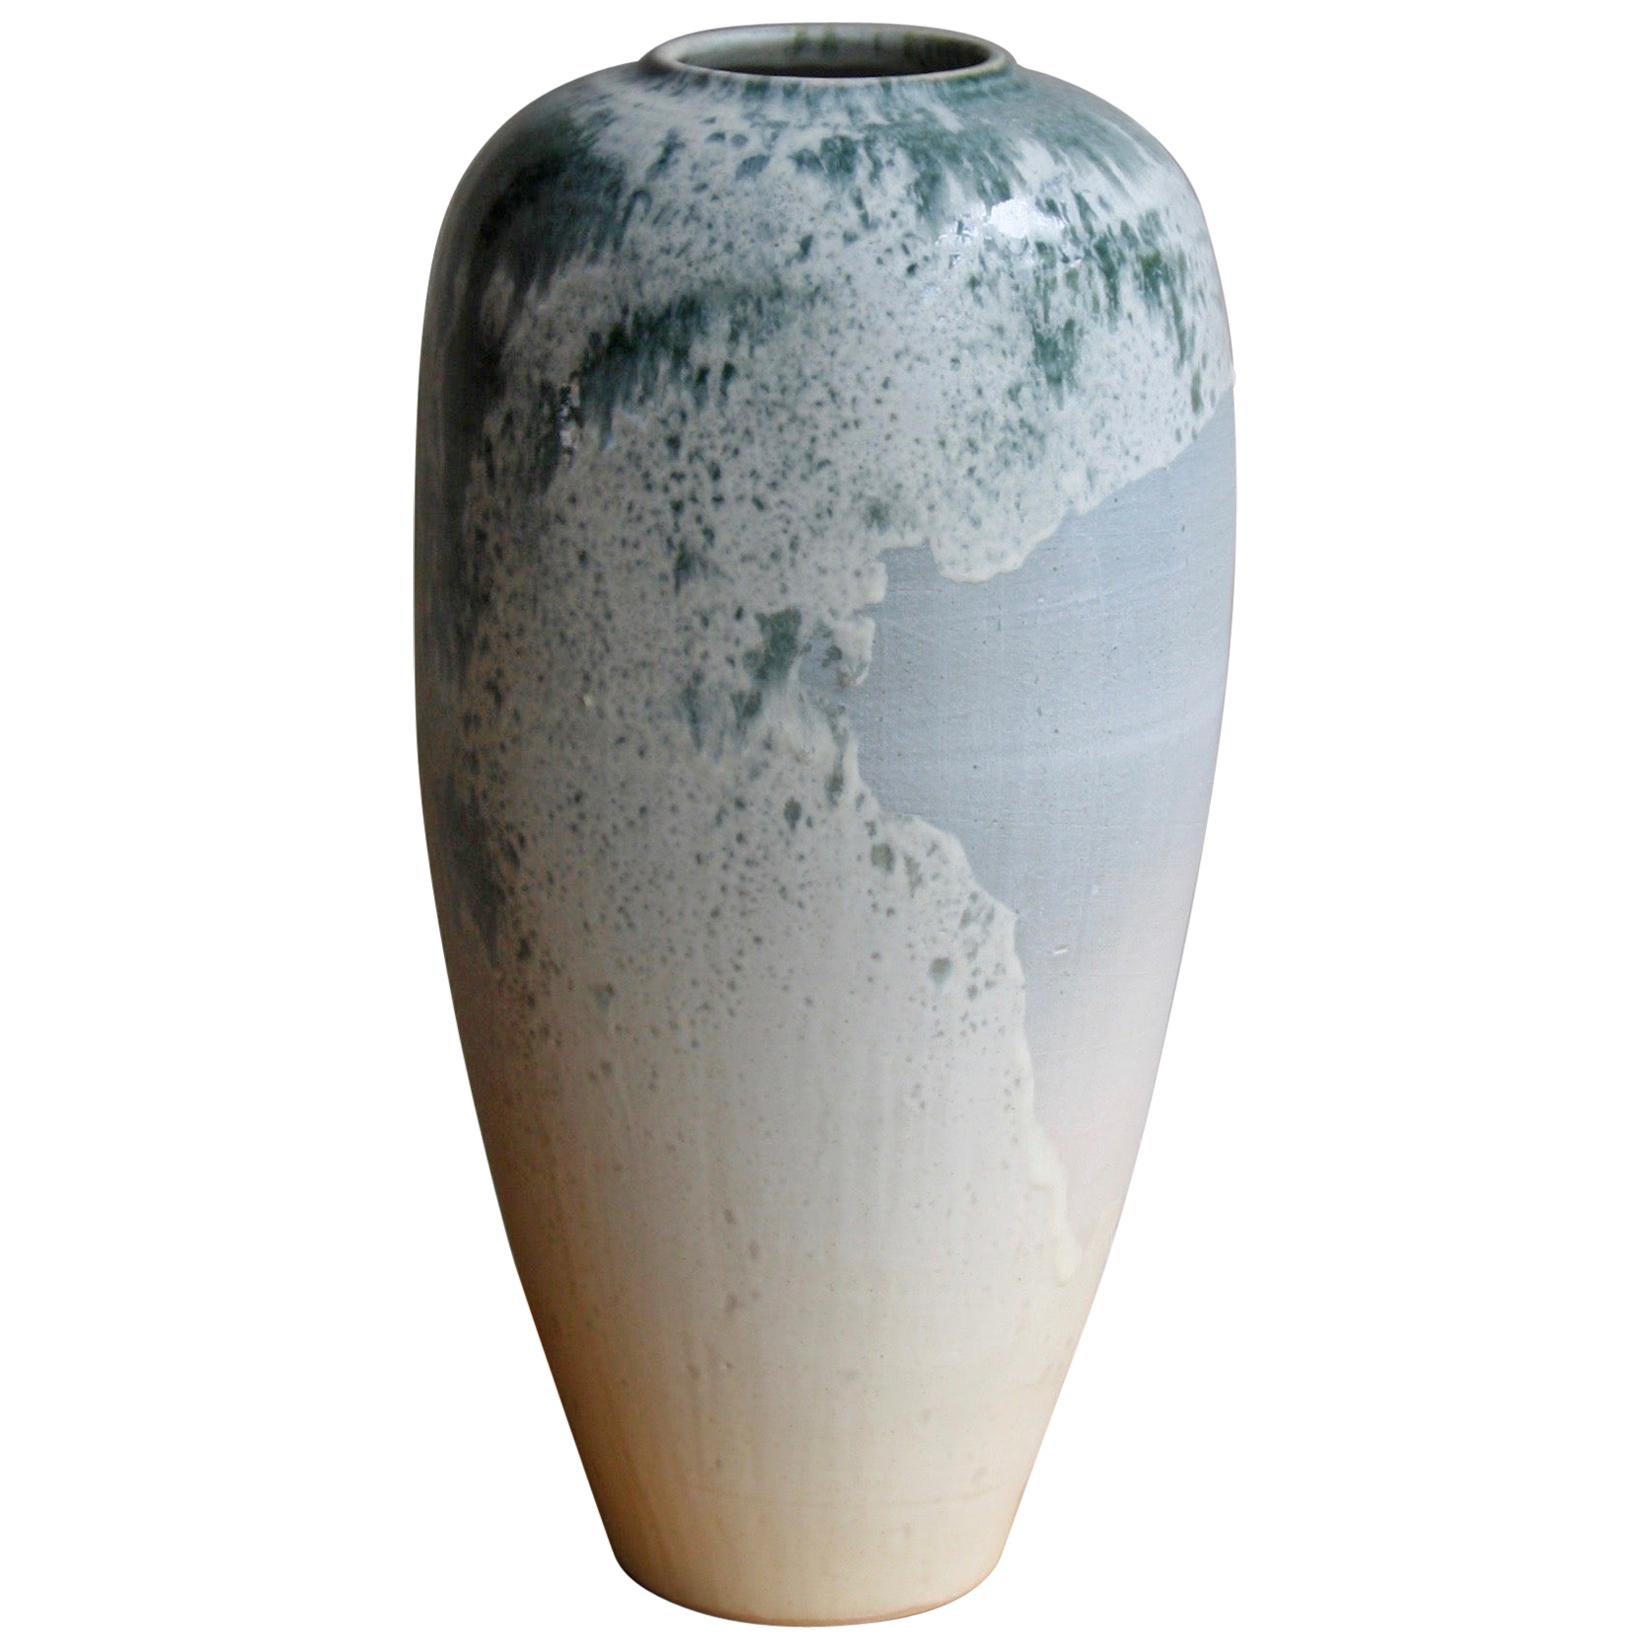 Kasper Würtz One Off Stoneware 'Rising Balloon' Vase #2 Blue & White Glaze